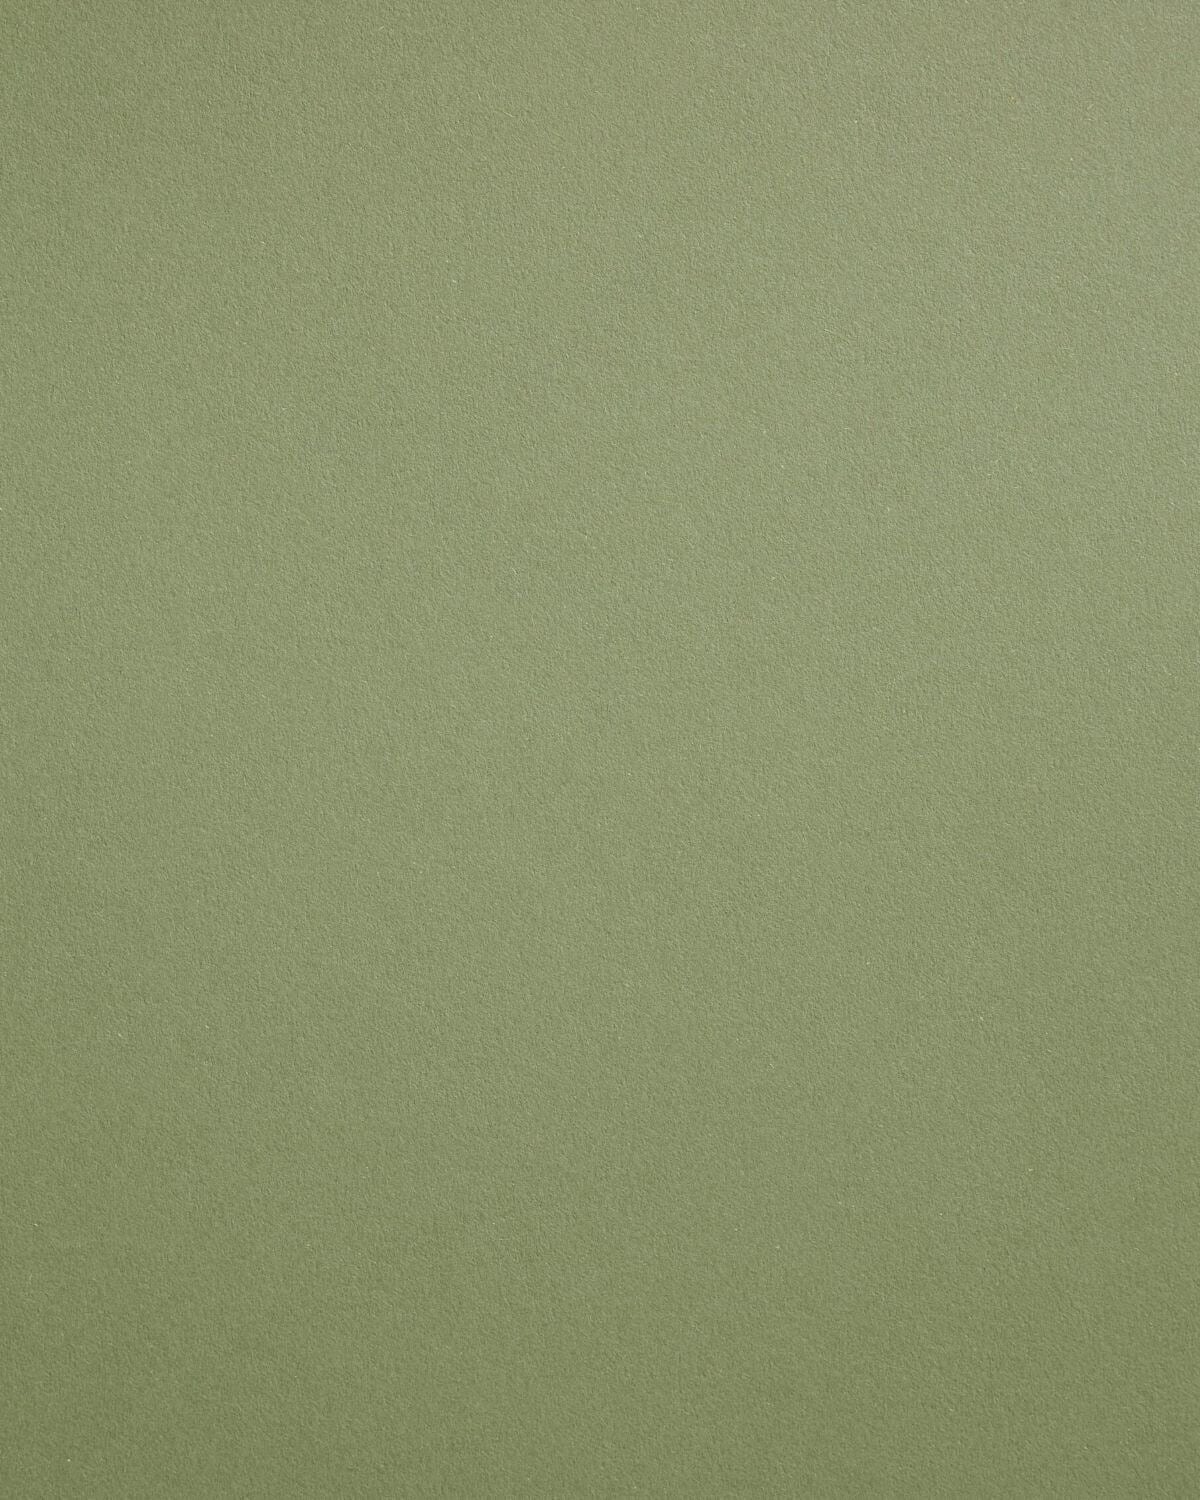 Verdigris Green Materica Cardstock Cover | 66 lb | 180 GSM / 8.5 x 11 / 40 Sheets